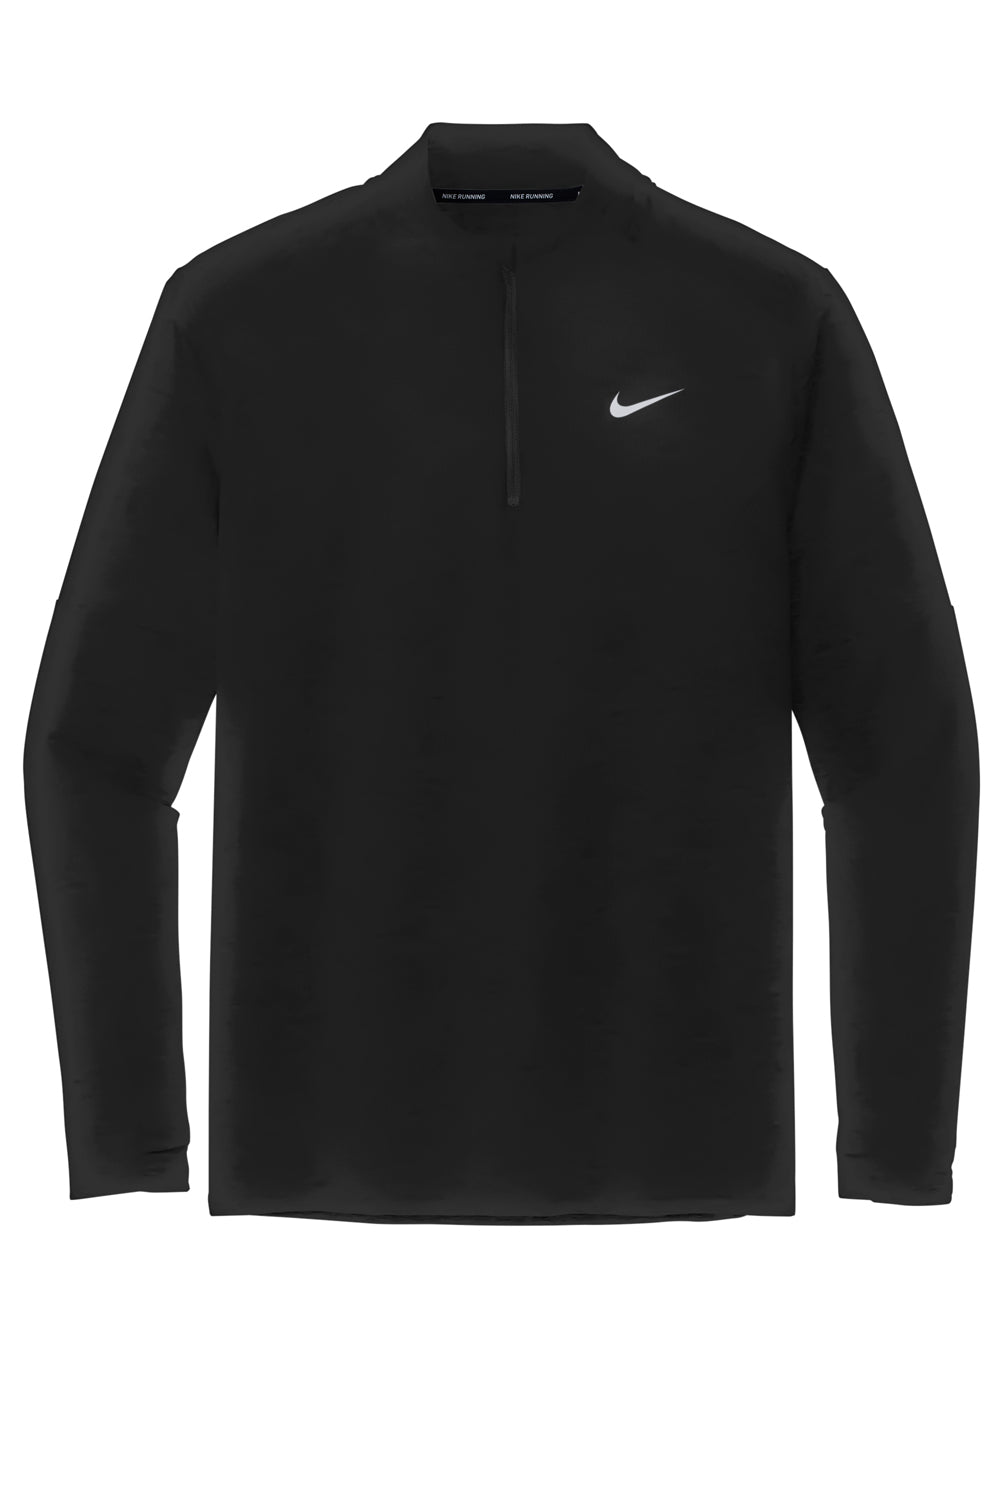 Nike NKDH4949 Mens Element Dri-Fit Moisture Wicking 1/4 Zip Sweatshirt Black Flat Front